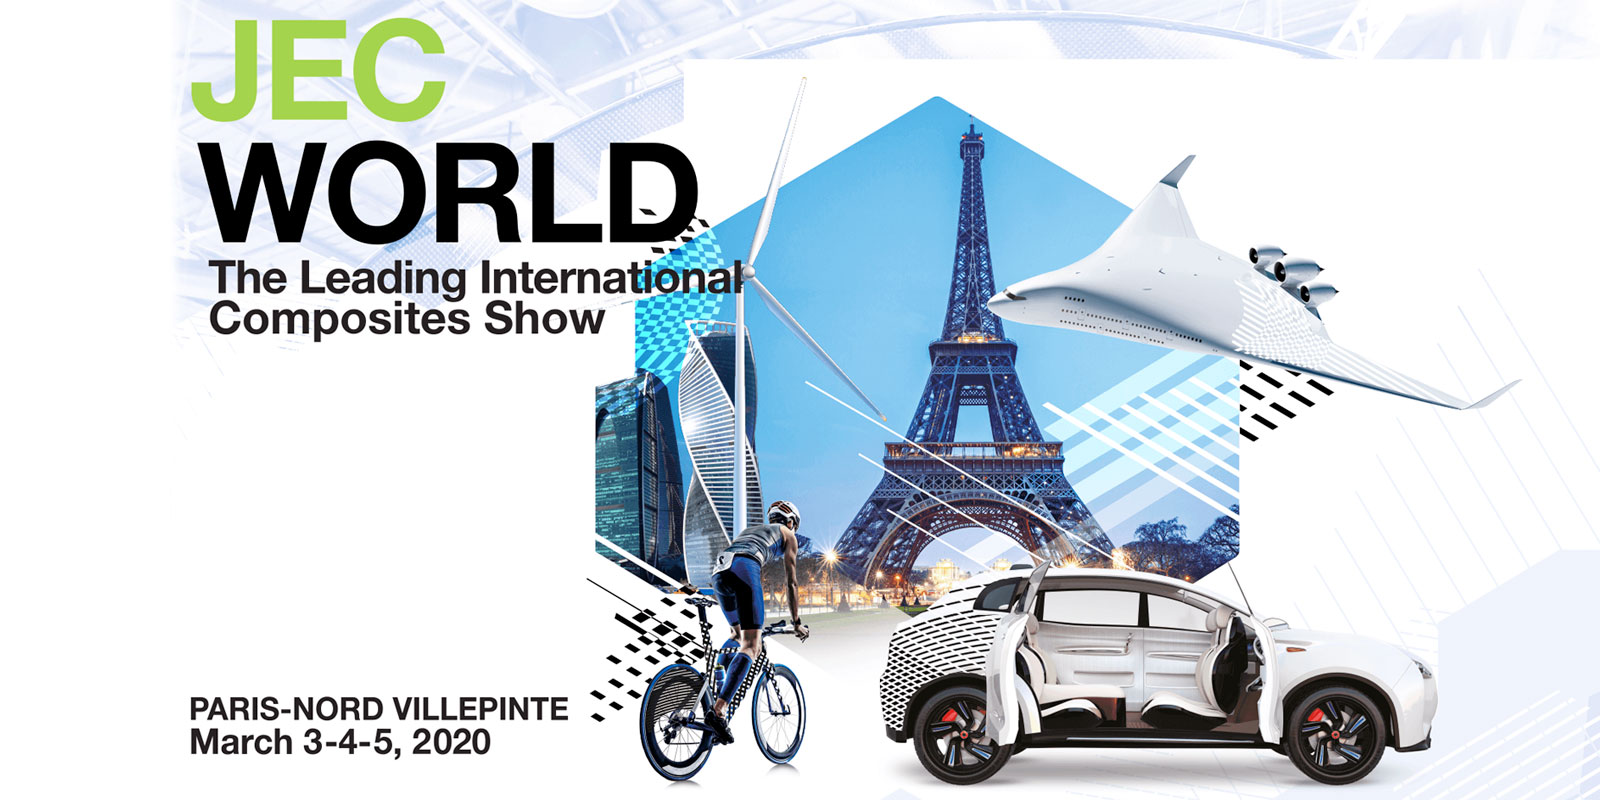 JEC WORLD 2020 - The Leading International Composites Show